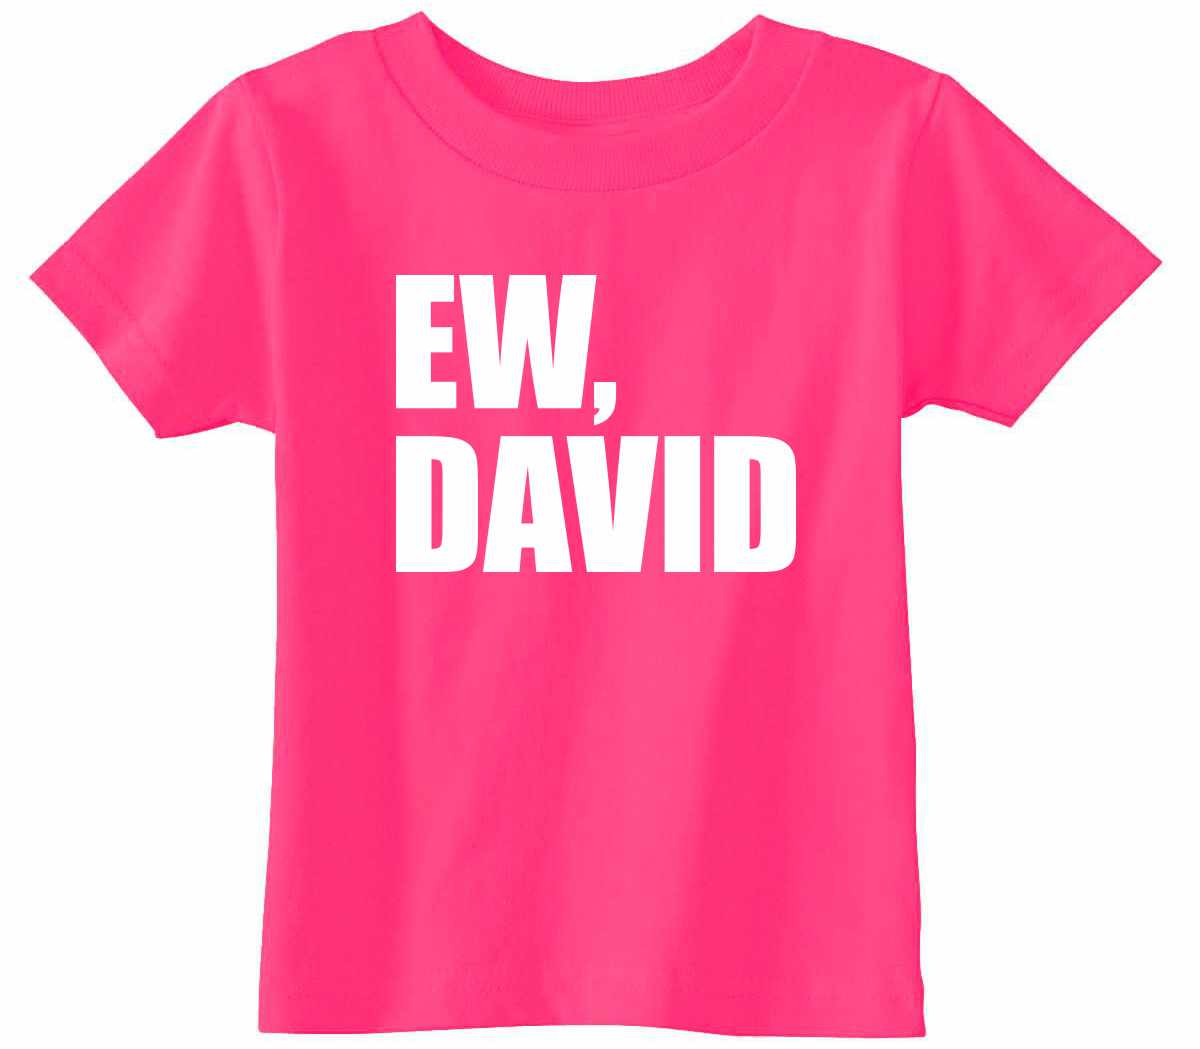 EW DAVID on Infant-Toddler T-Shirt (#989-7)